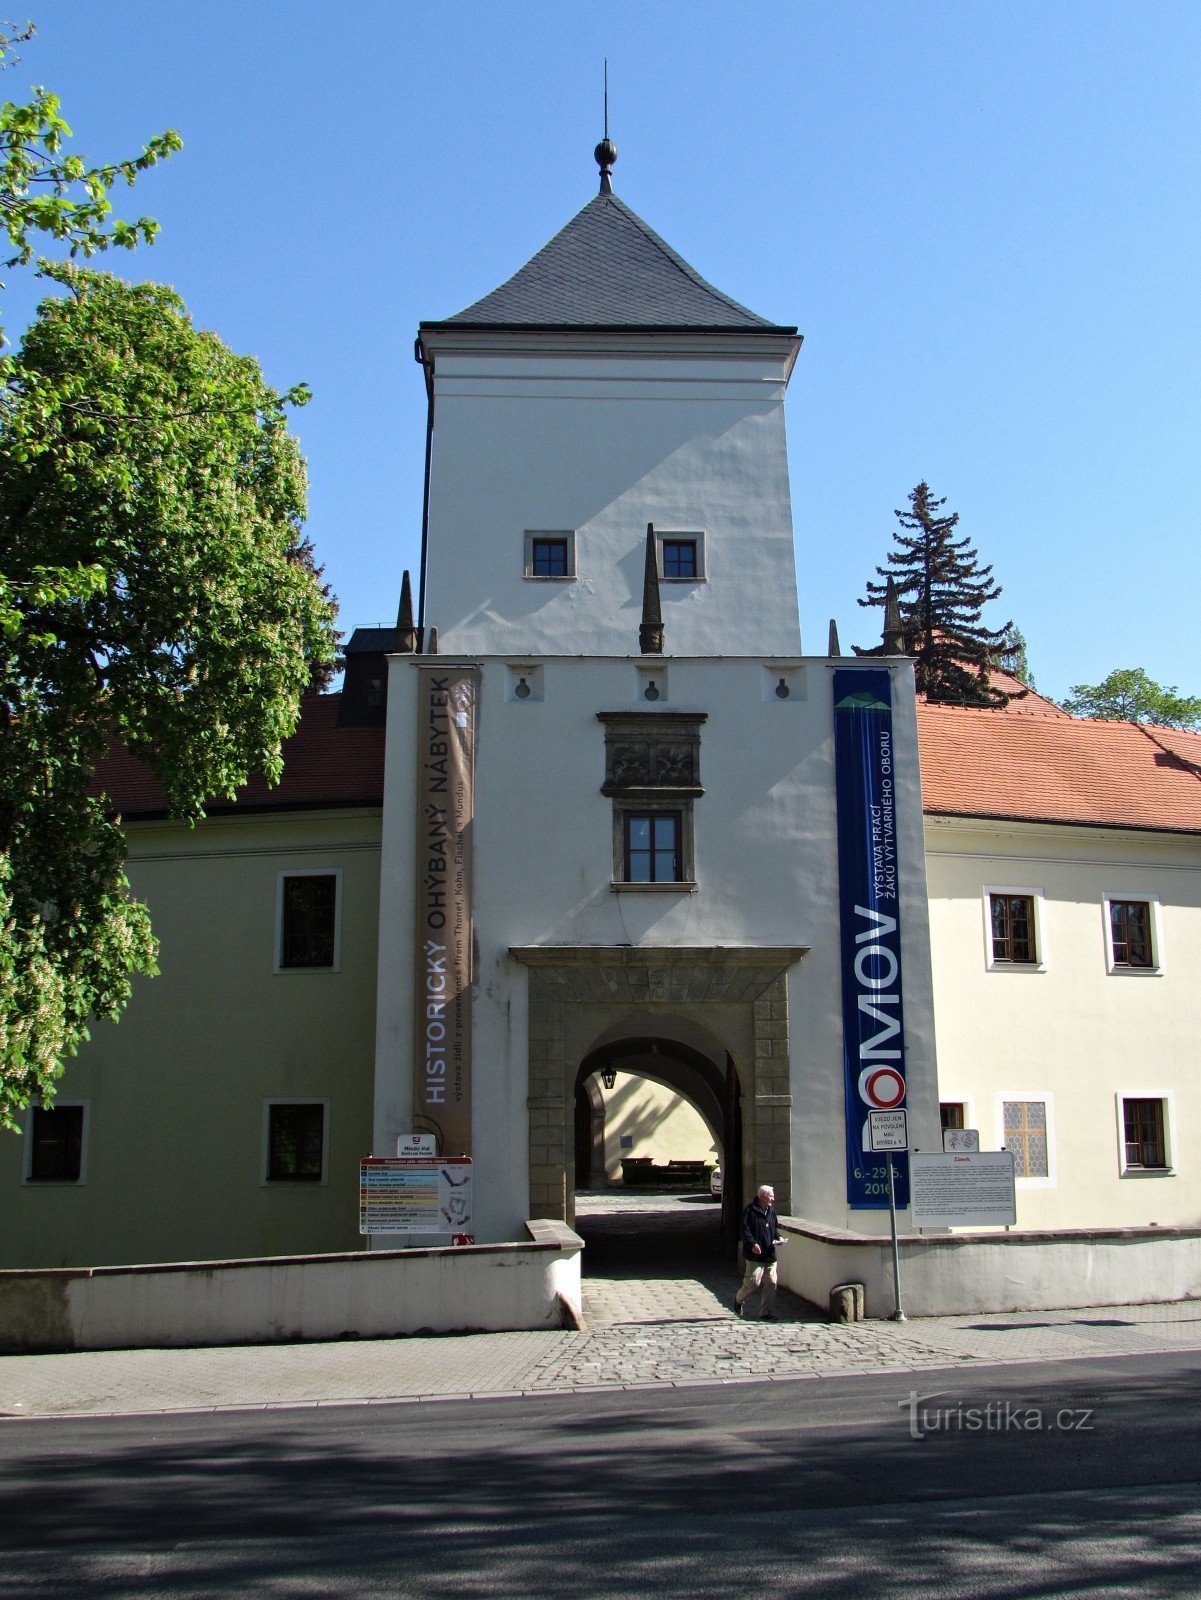 Visita del castello di Bystřice pod Hostýnem